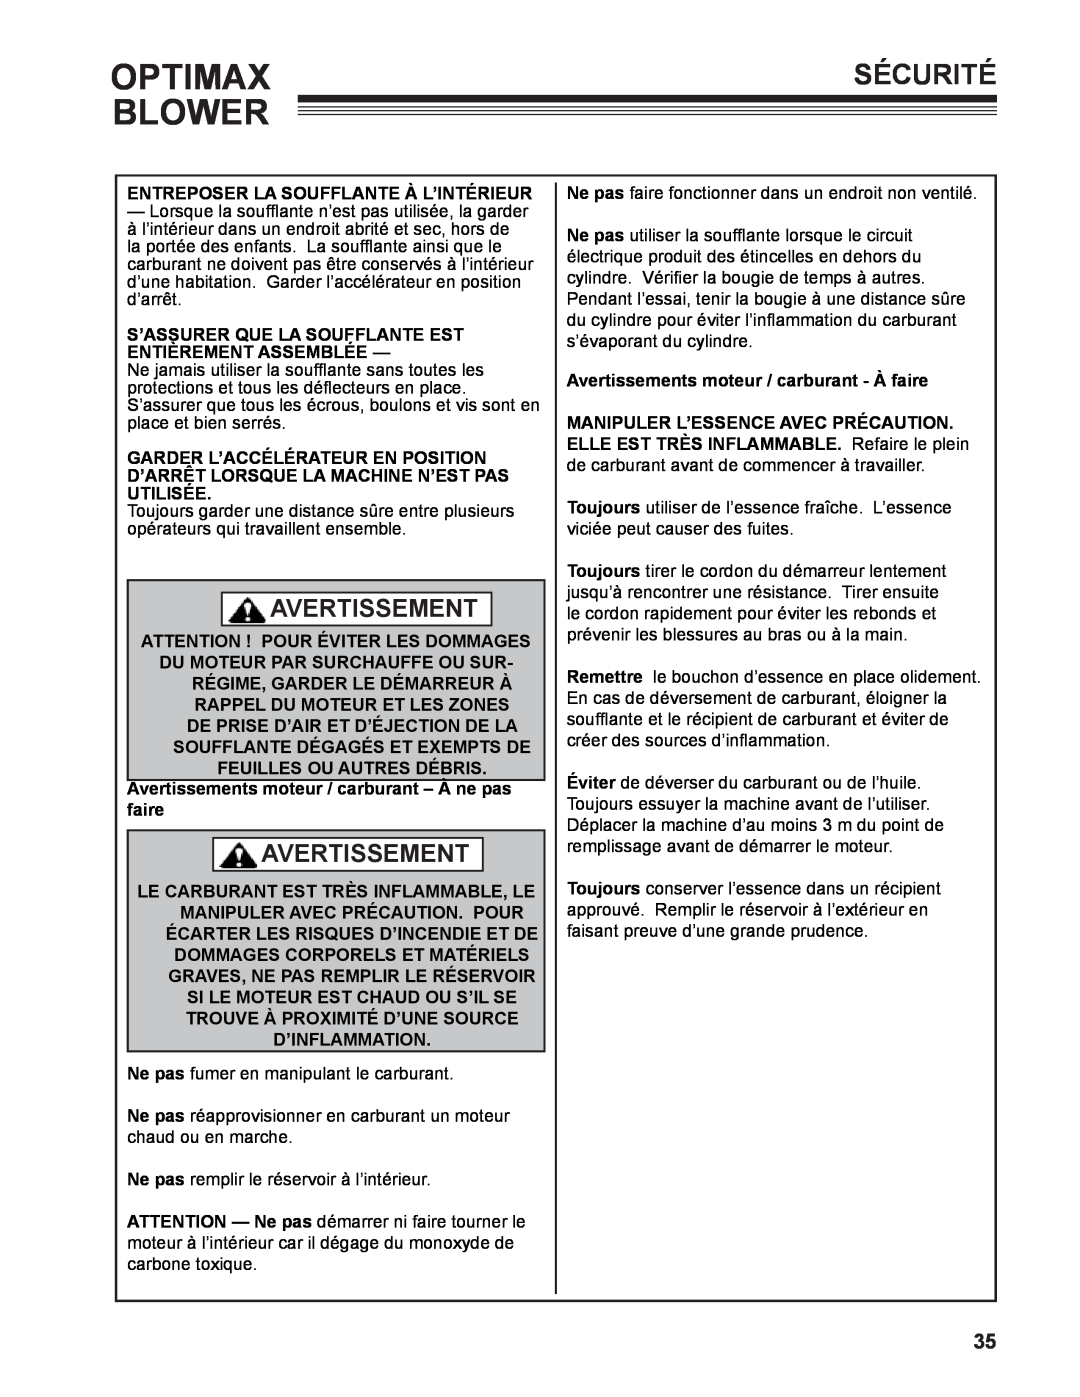 Little Wonder LB901-00-01 technical manual Optimax, Blower, Sécurité, Avertissement 